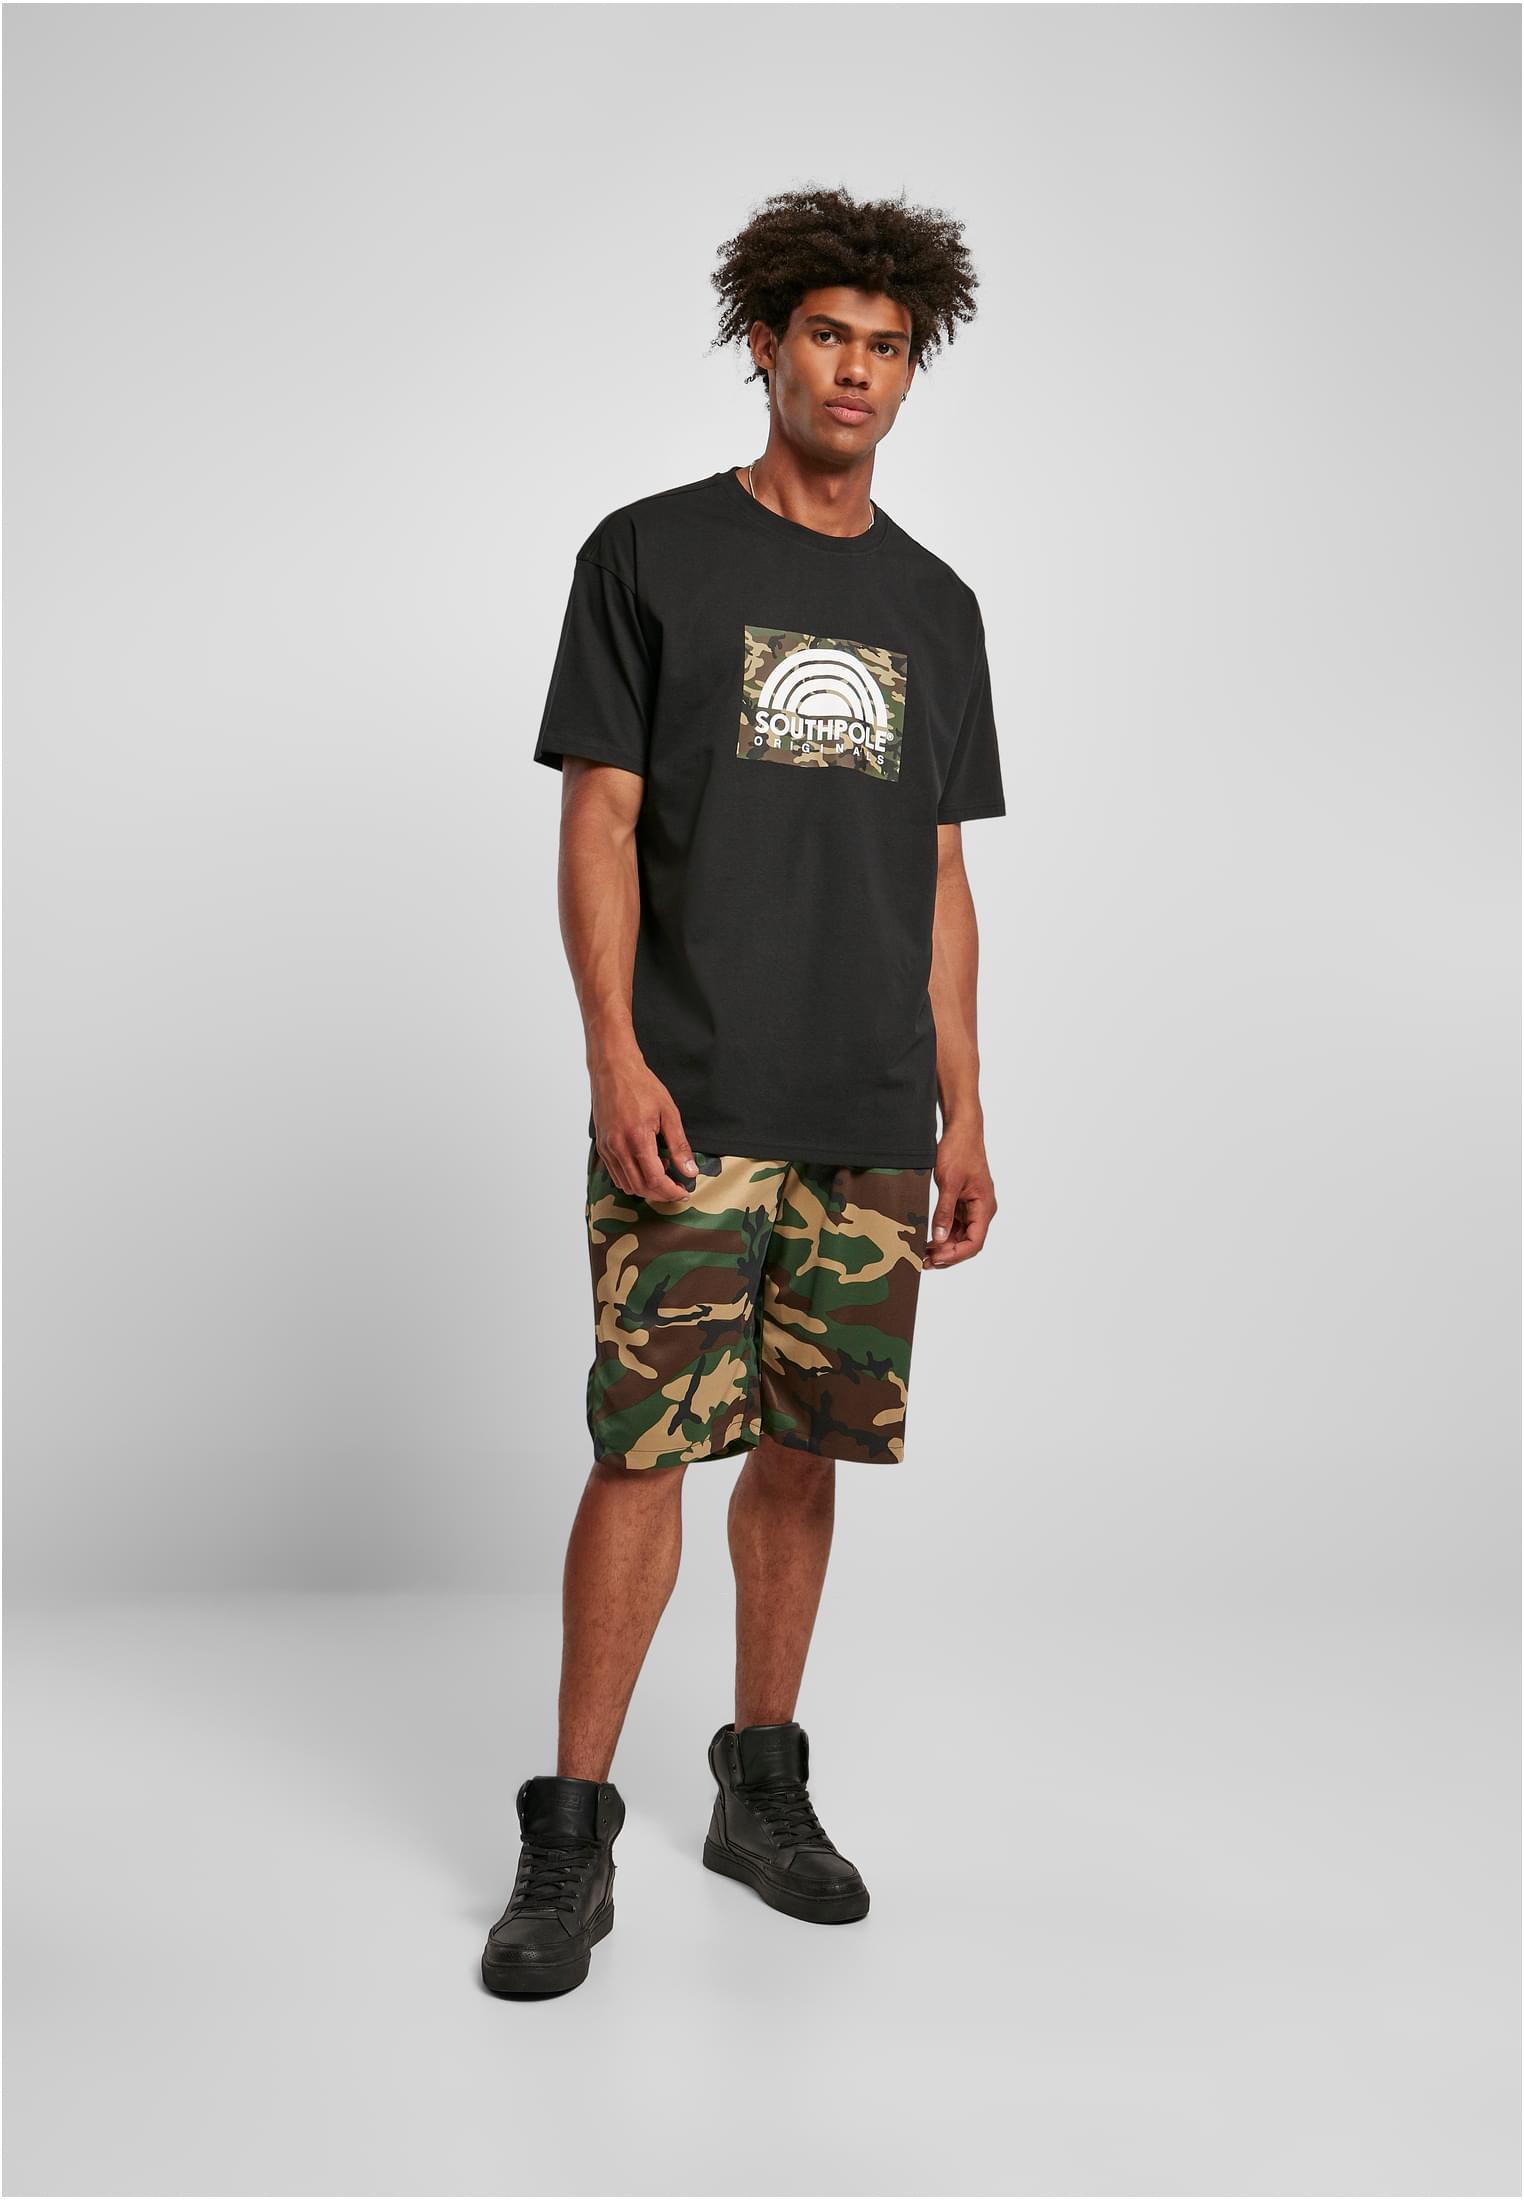 Southpole Basketball Shorts black -  - Online Hip Hop  Fashion Store